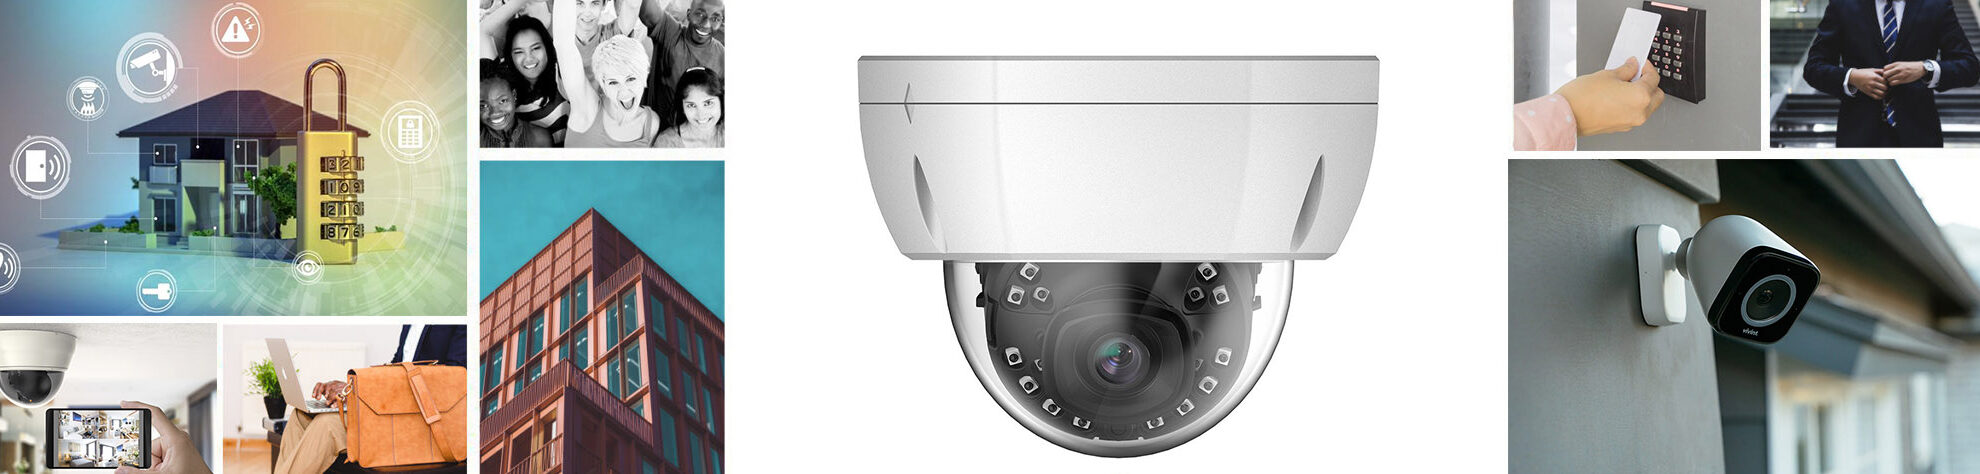 security cameras tortola bvi microantix